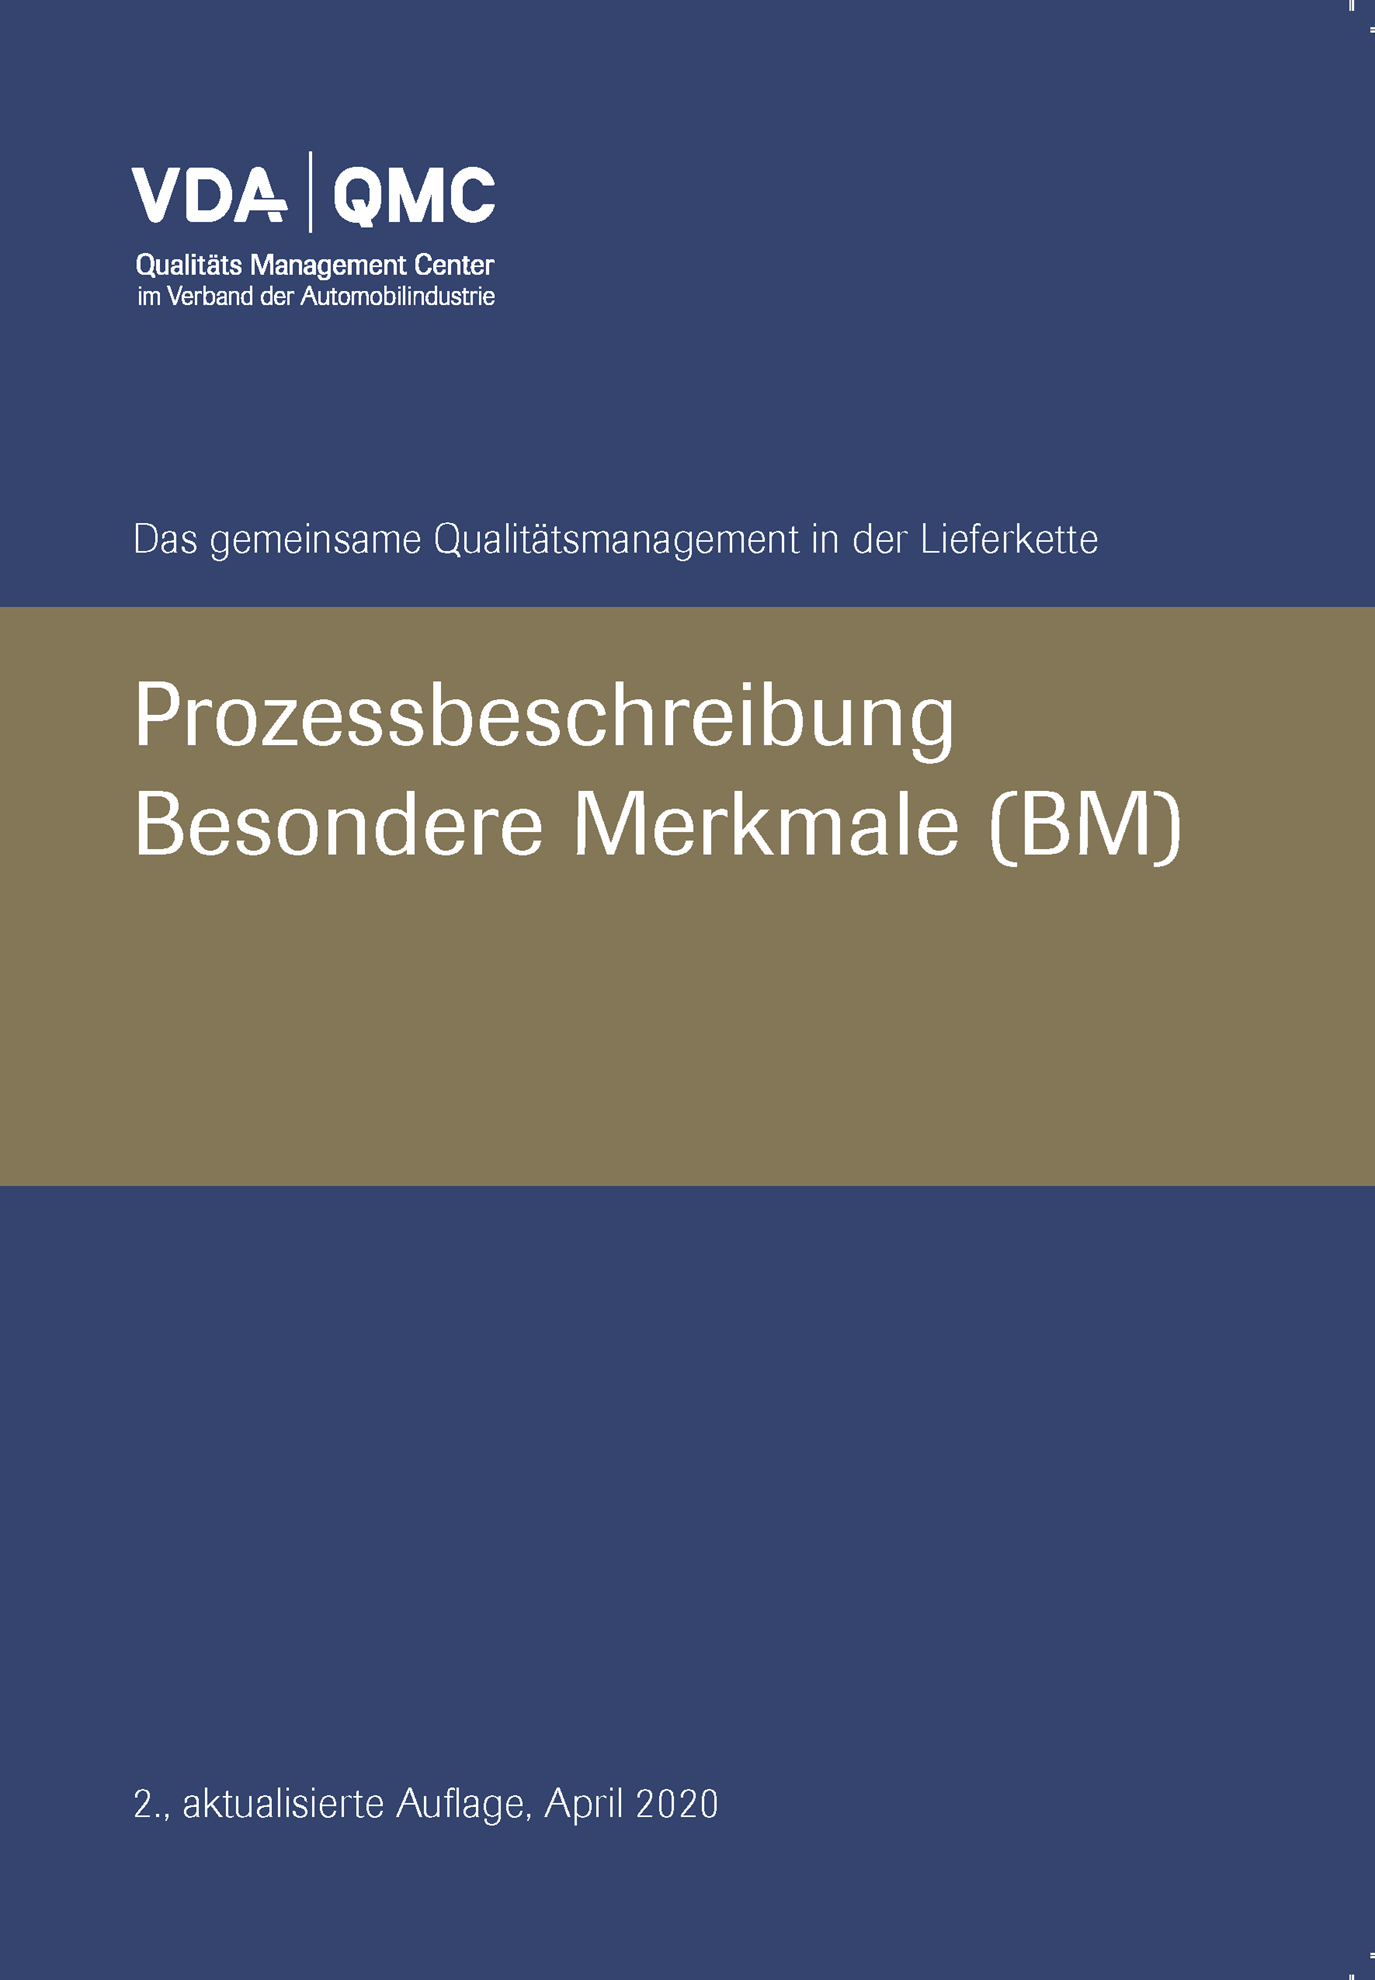 Picture of Besondere Merkmale (BM) 04/2020